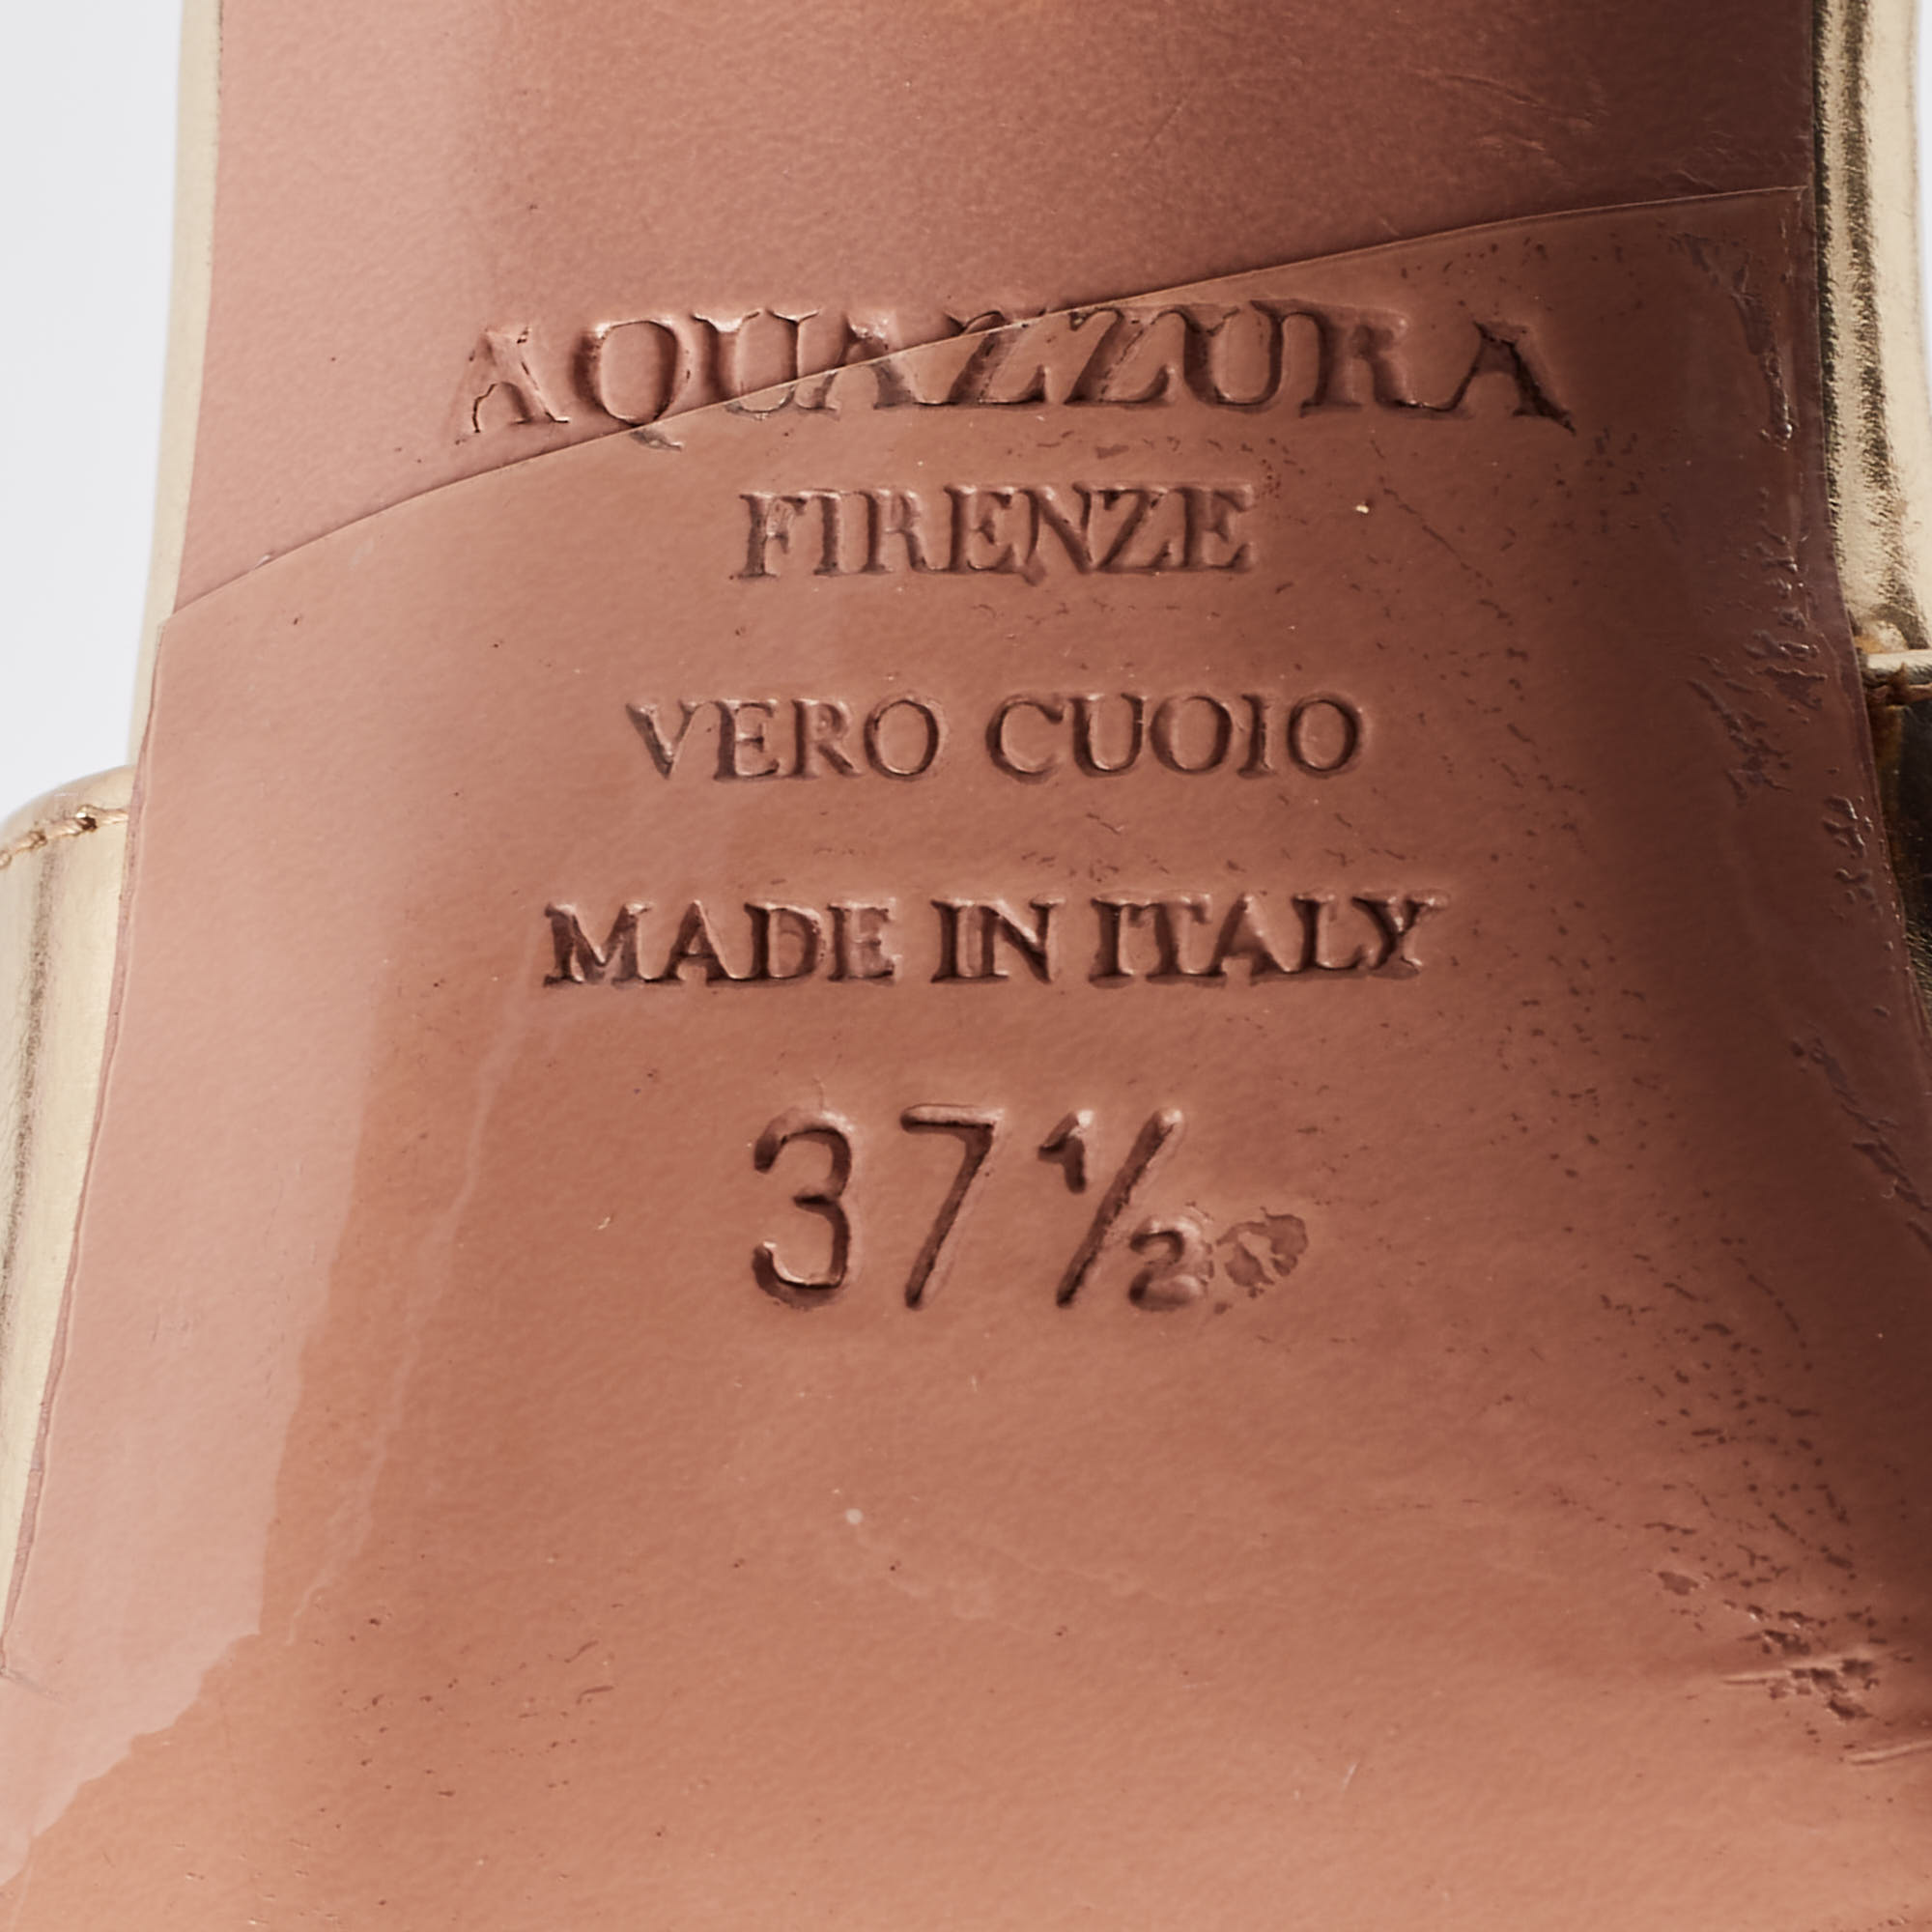 Aquazzura Gold Foil Leather Sofia Open Toe Ankle Wrap Sandals Size 37.5